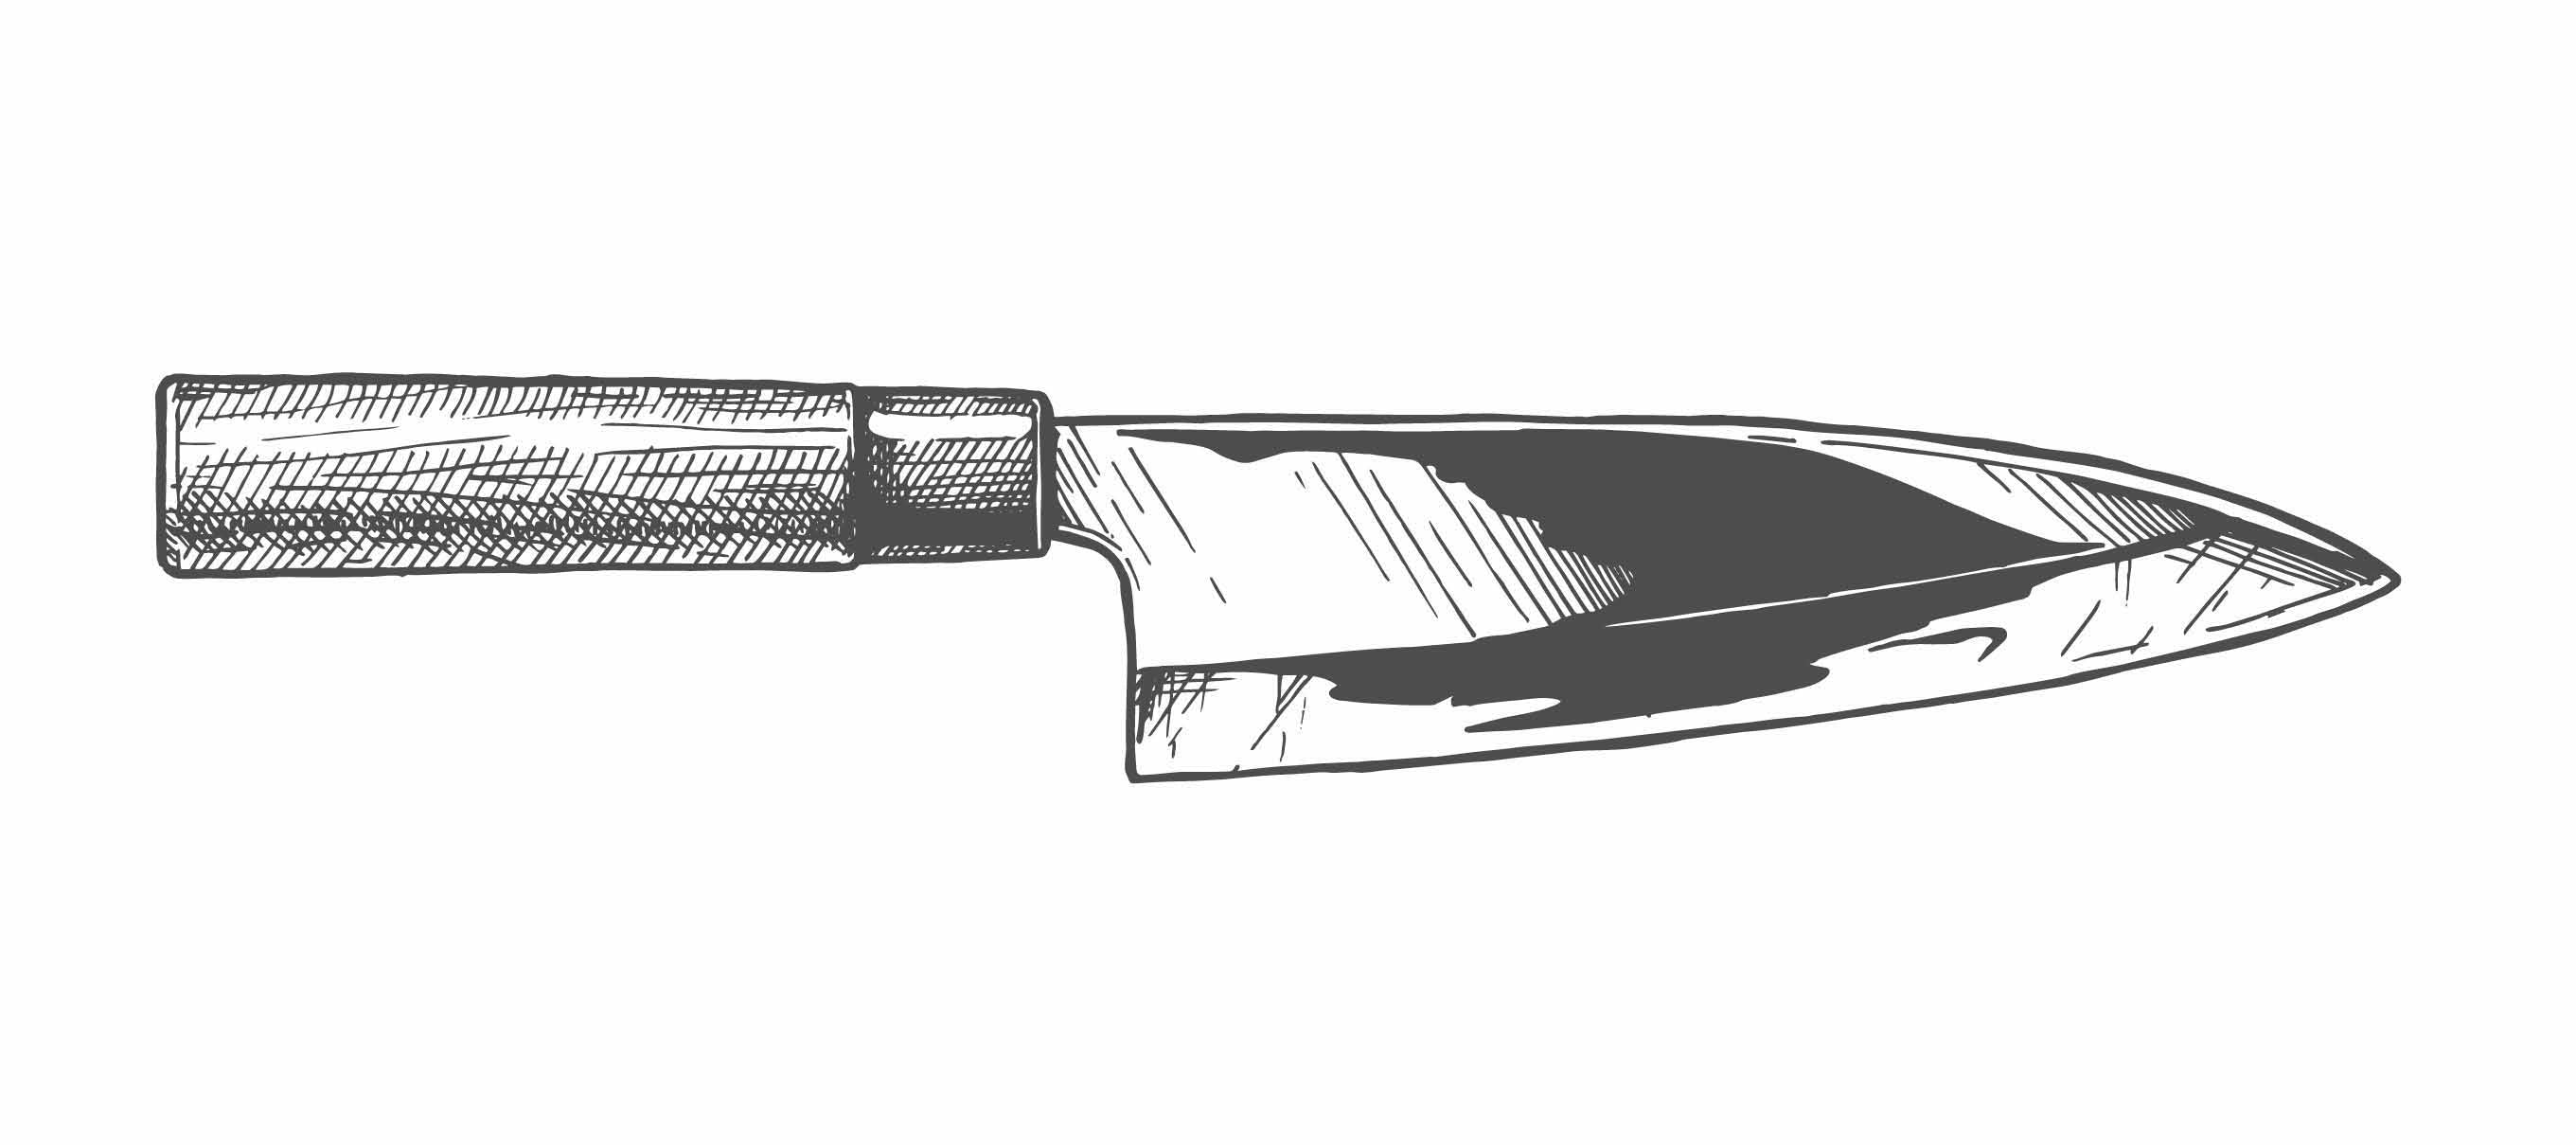 Cuchillos japoneses - Cuchillería Navarro